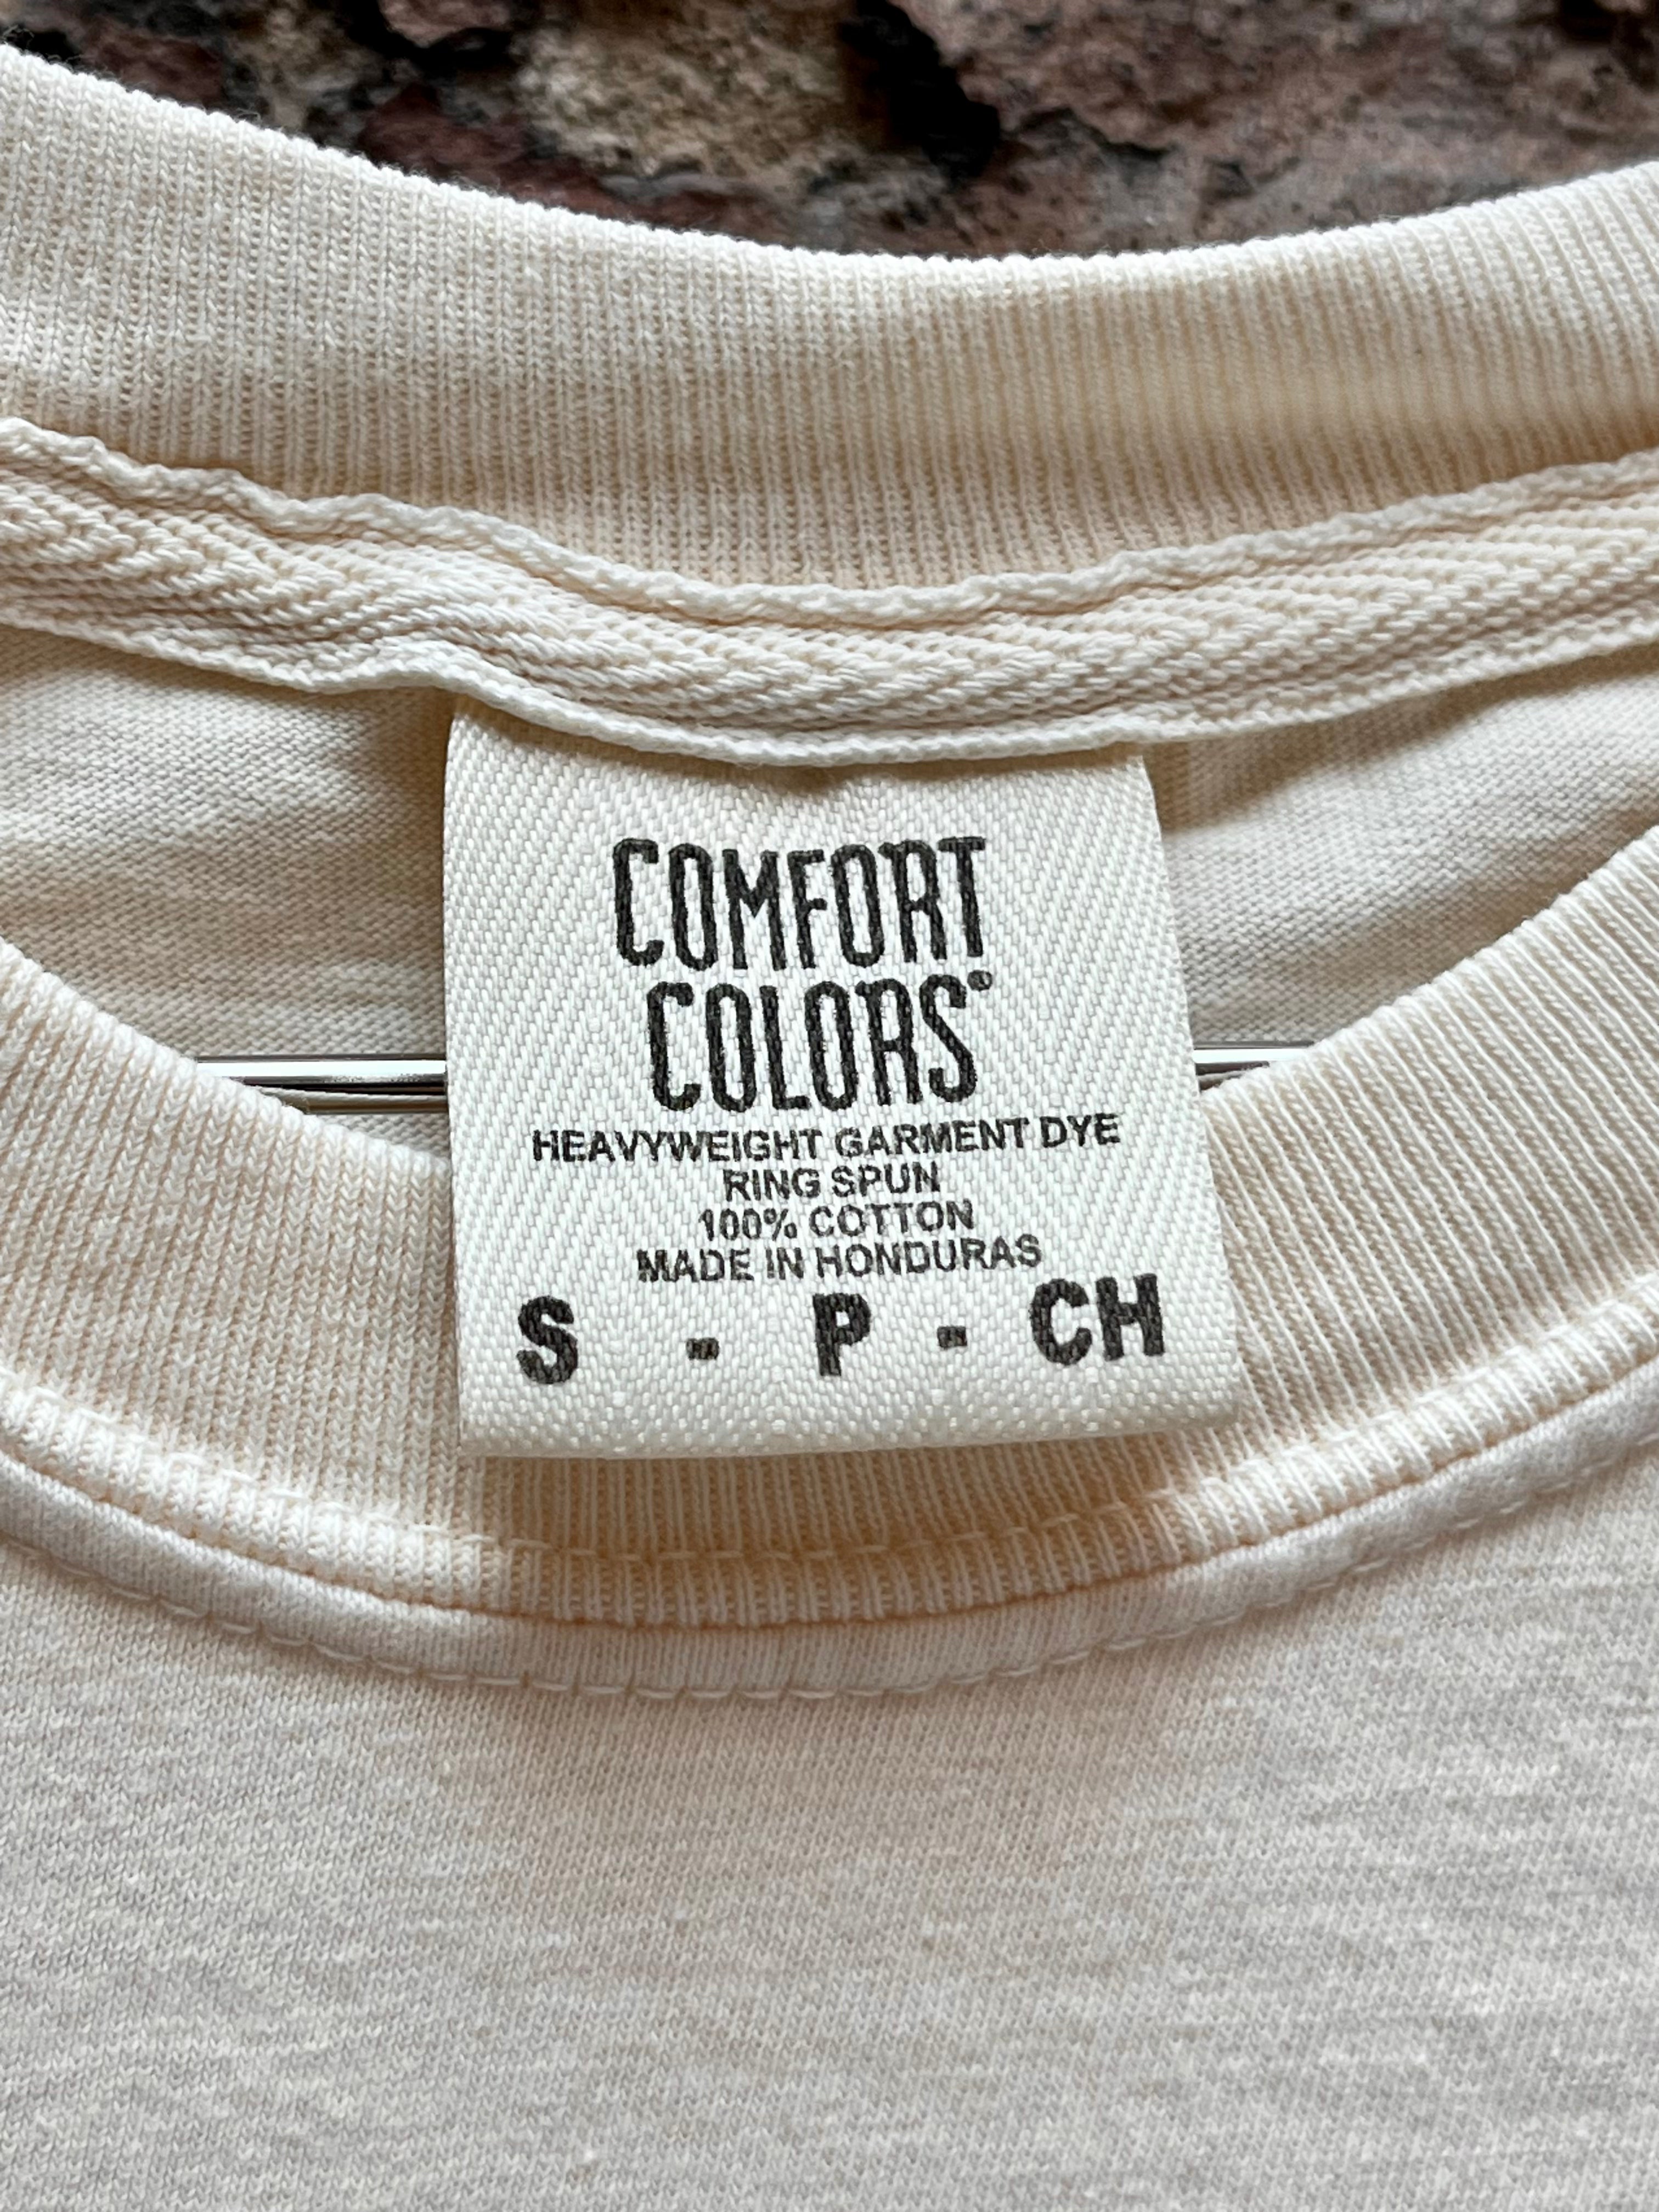 Comfort Colors Heavyweight Garment Dye Ring Spun 100% Cotton